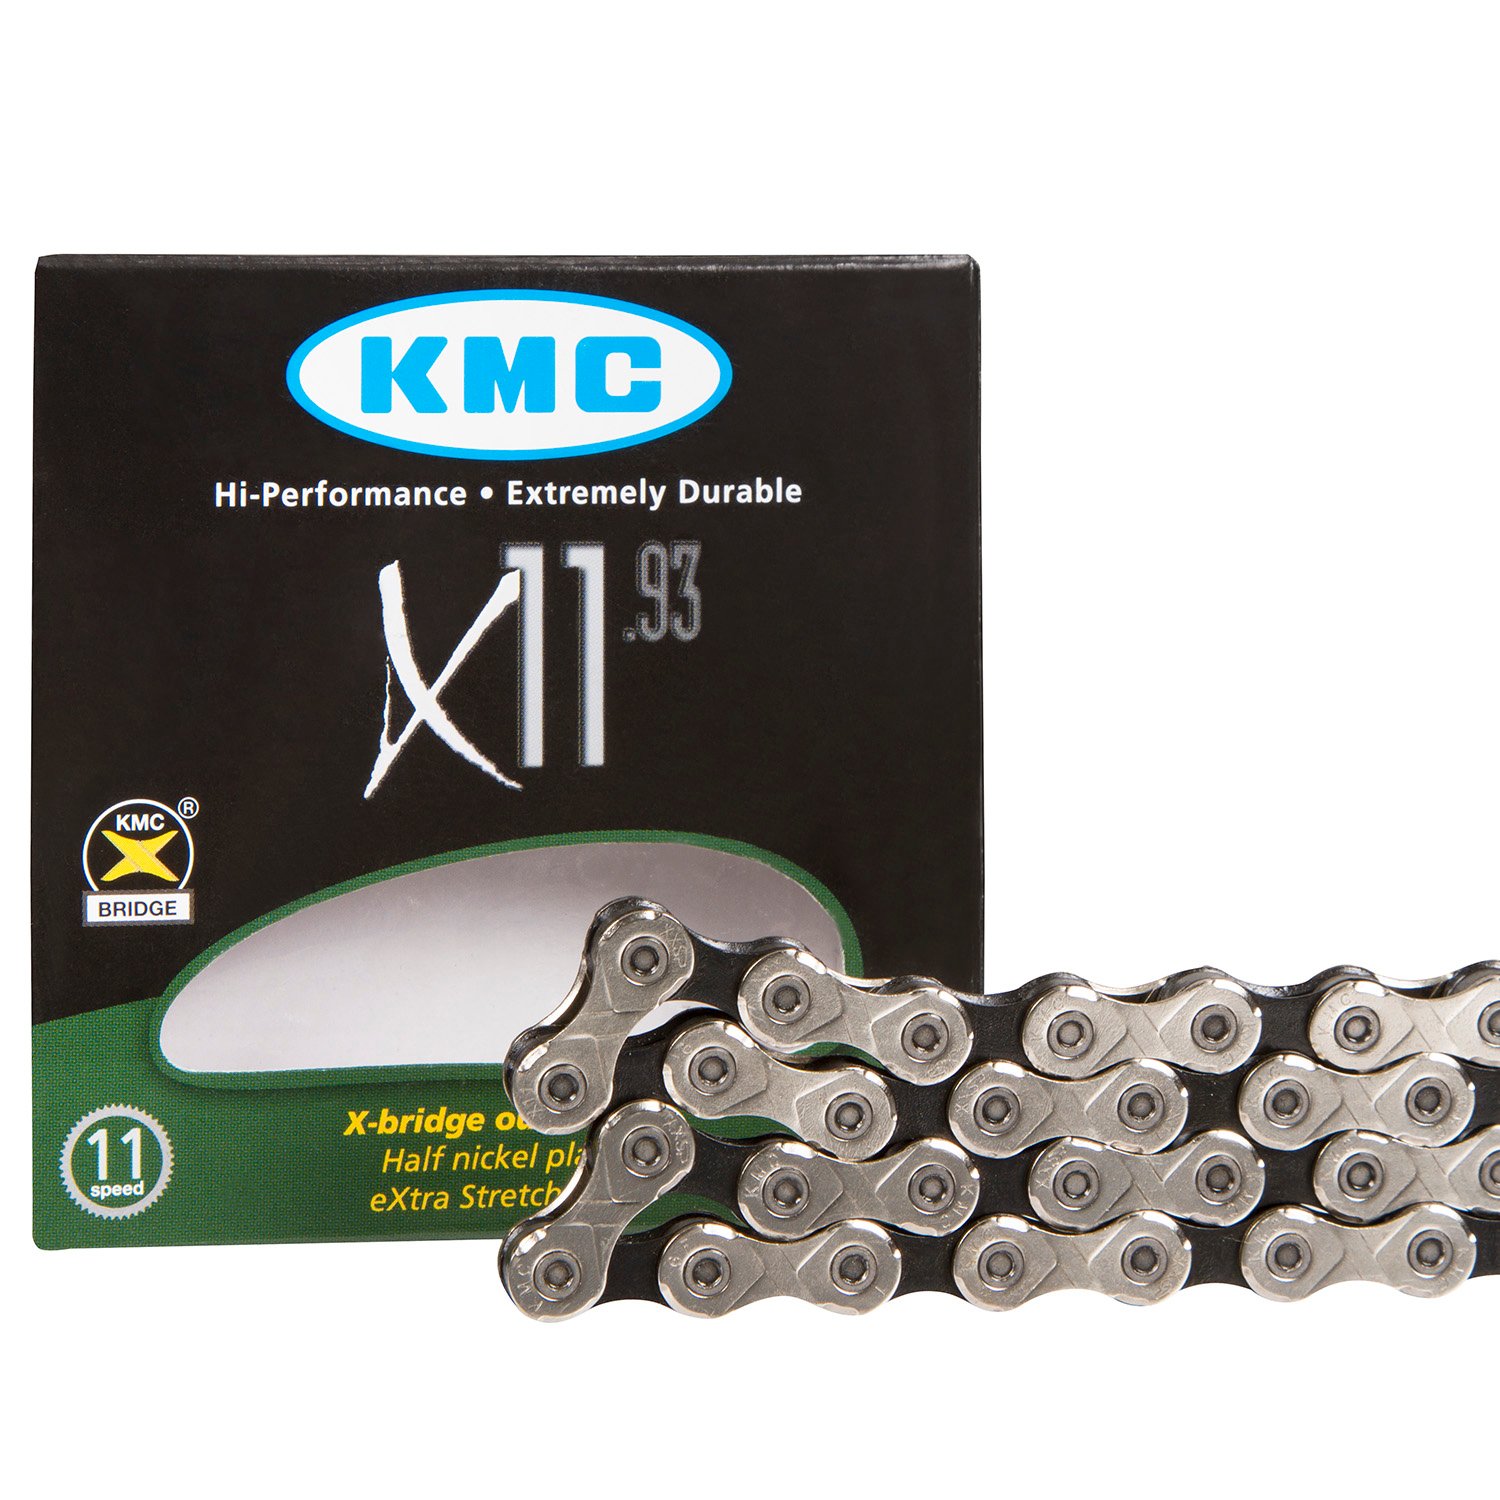 KMC MTB Chain X-11.93 11-Speed, 118 Links